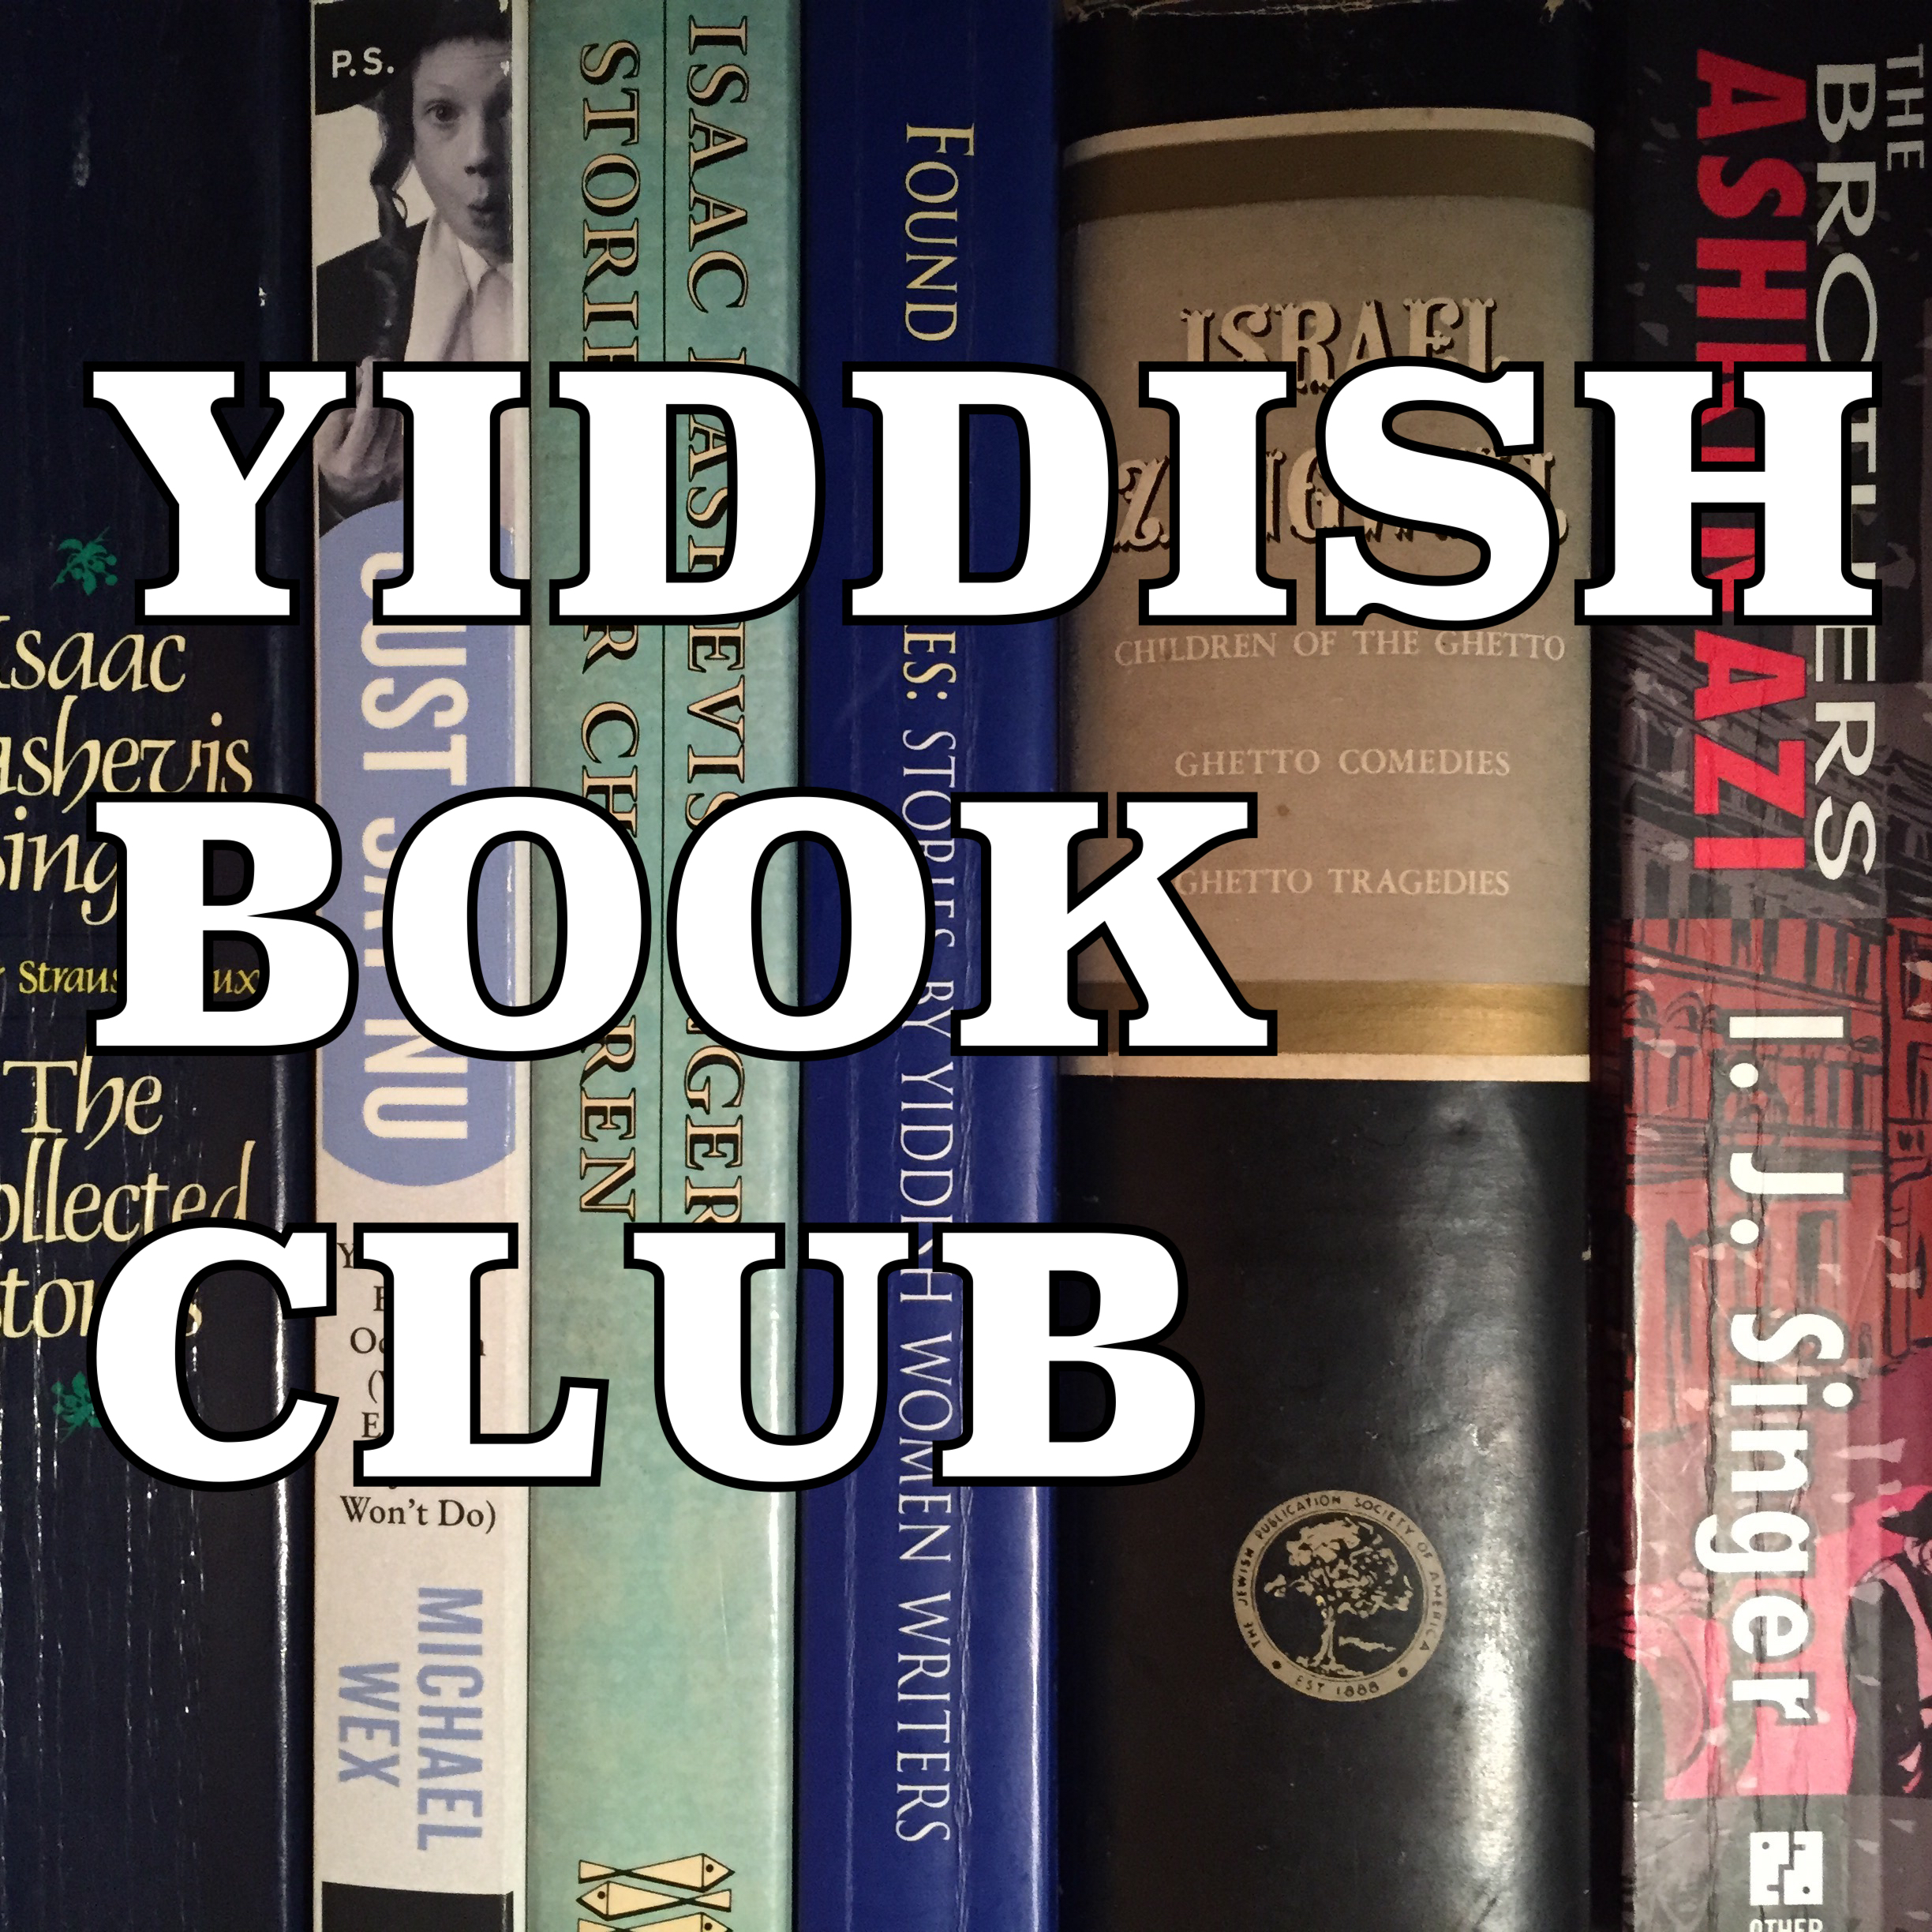 Yiddish Book Club